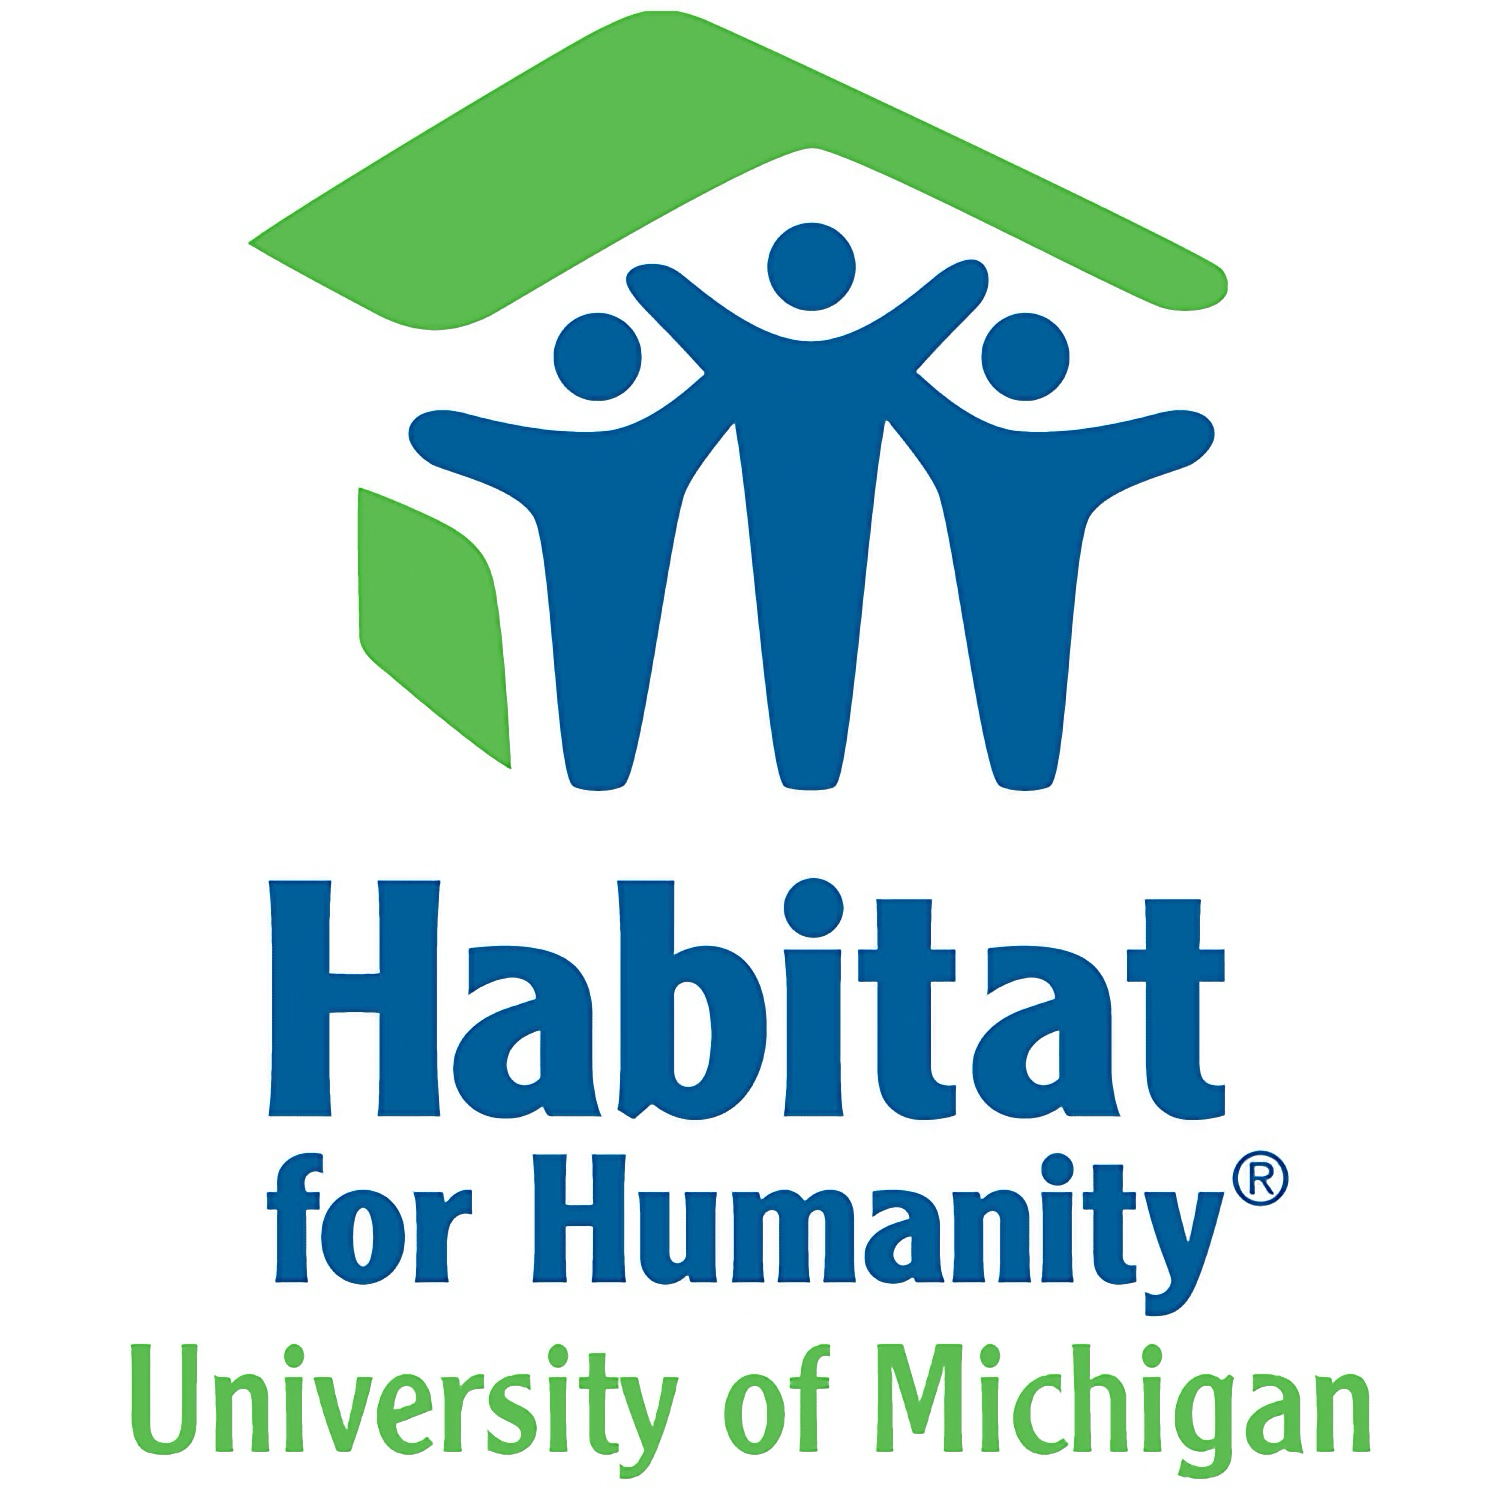 Habitat for Humanity at the University of Michigan